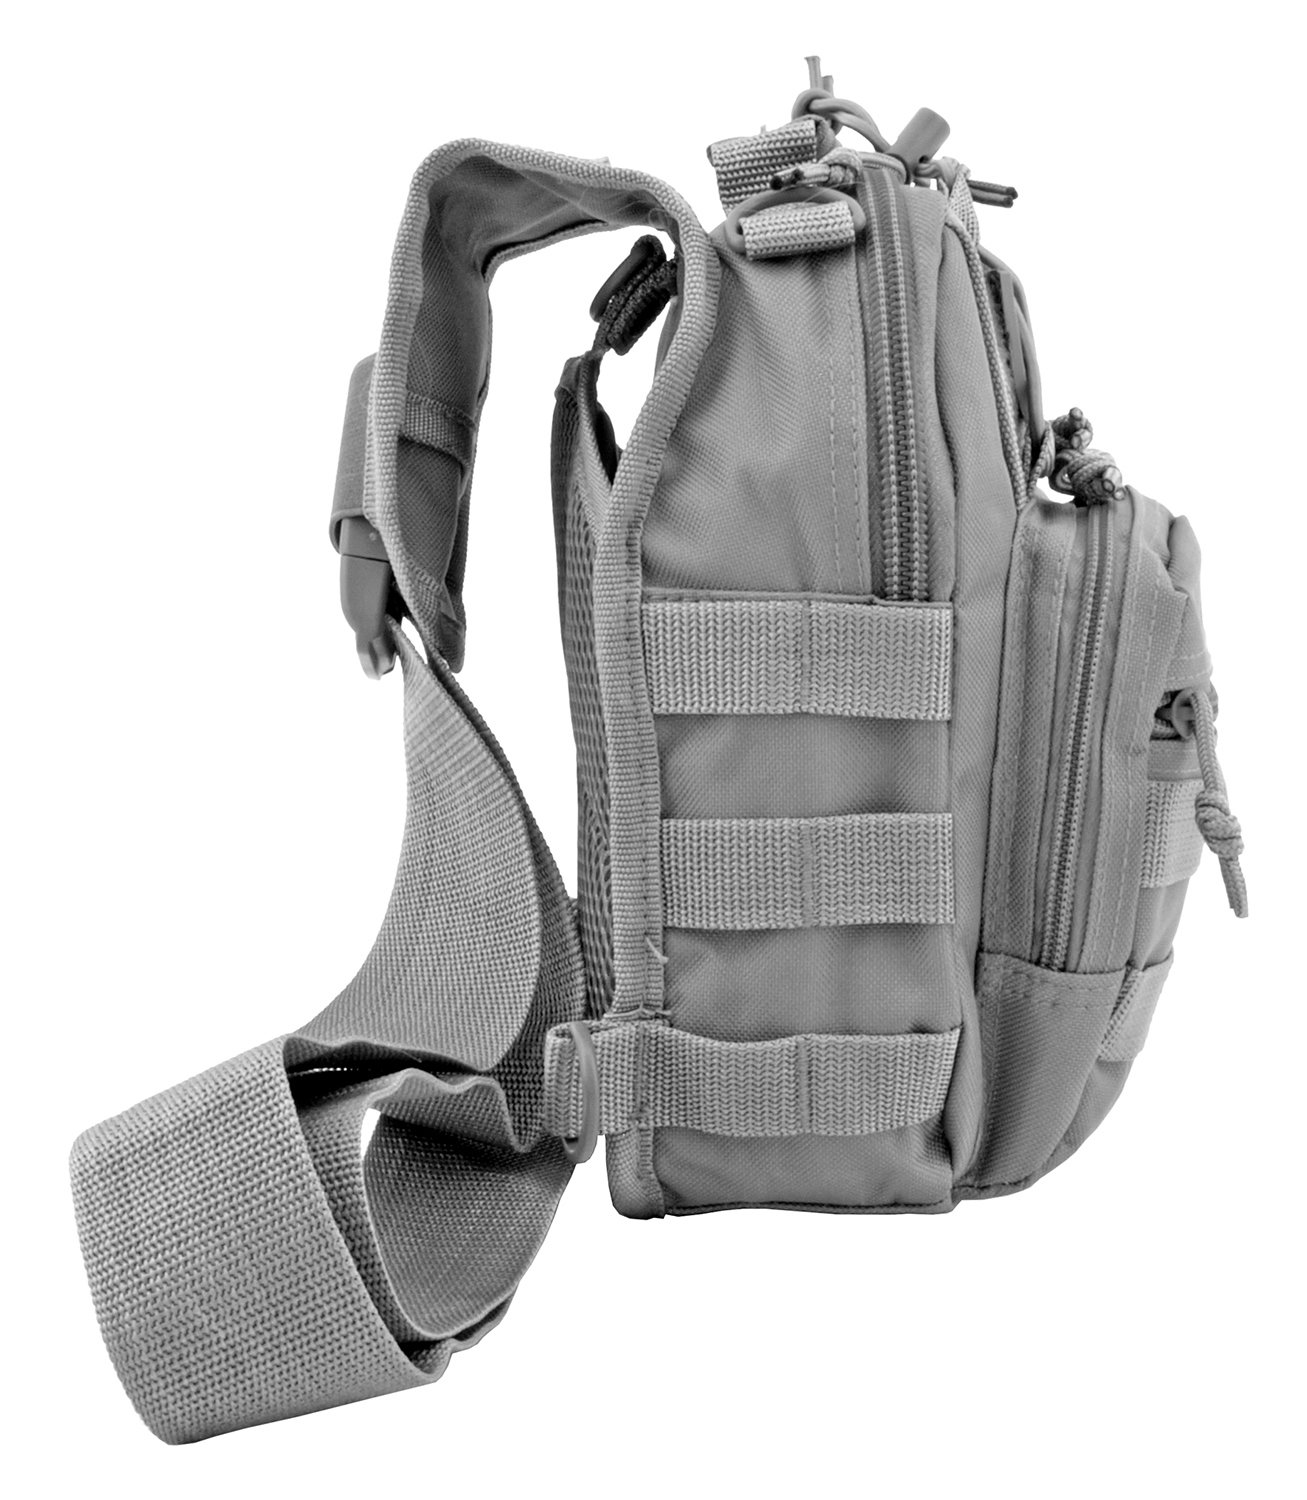 Concealed Carry Tactical Sling Bag - Grey